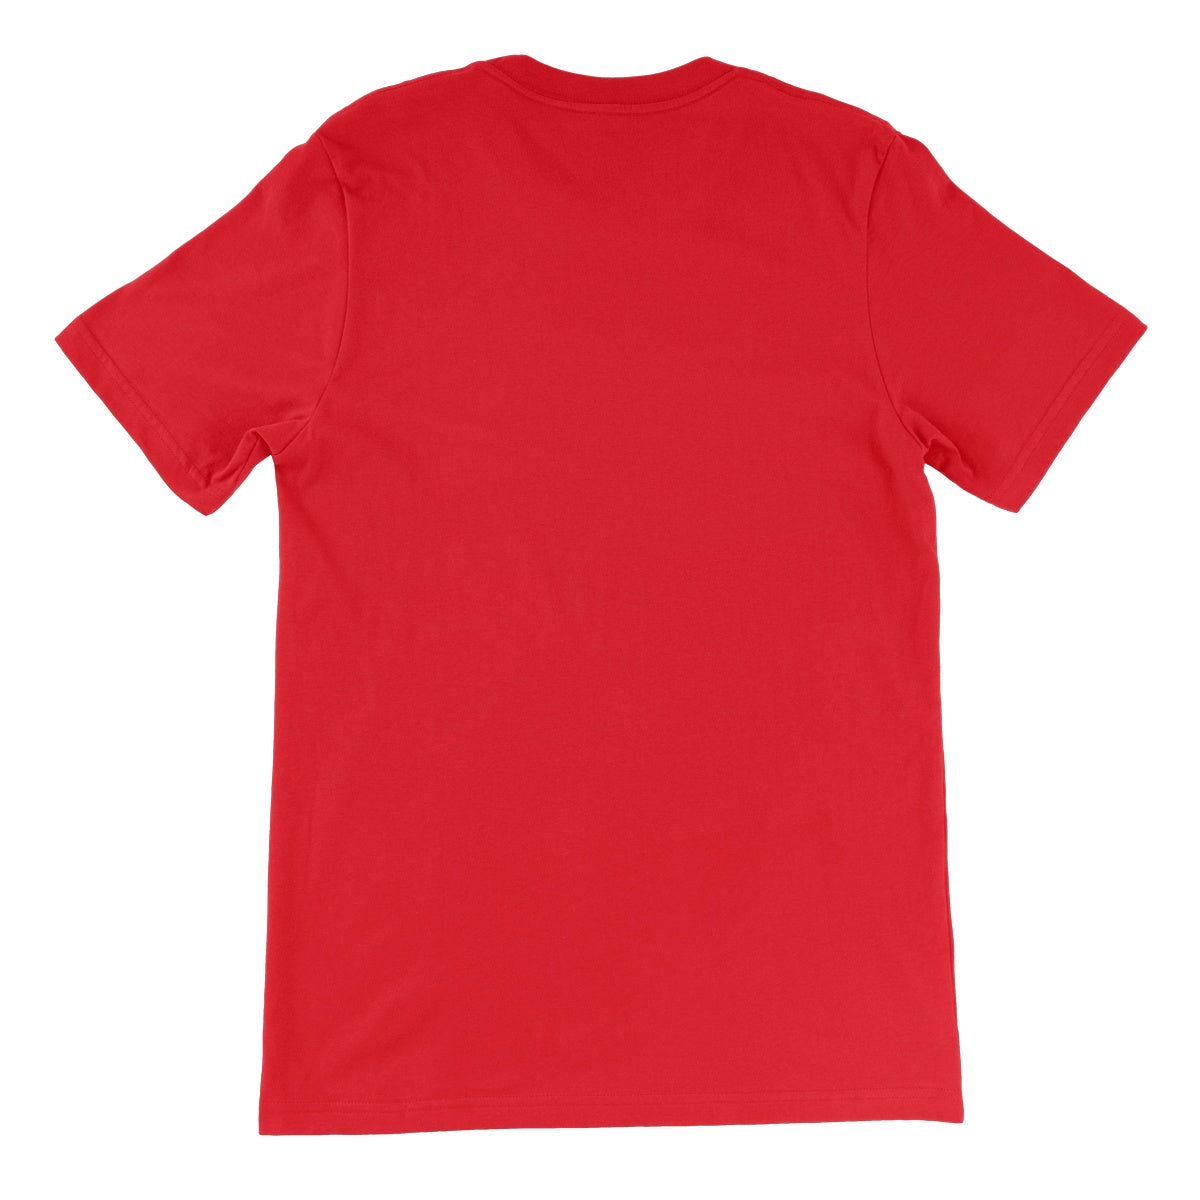 AQUA HMP2 - 05 - Kinder - Unisex T-Shirt aus feinem Jersey